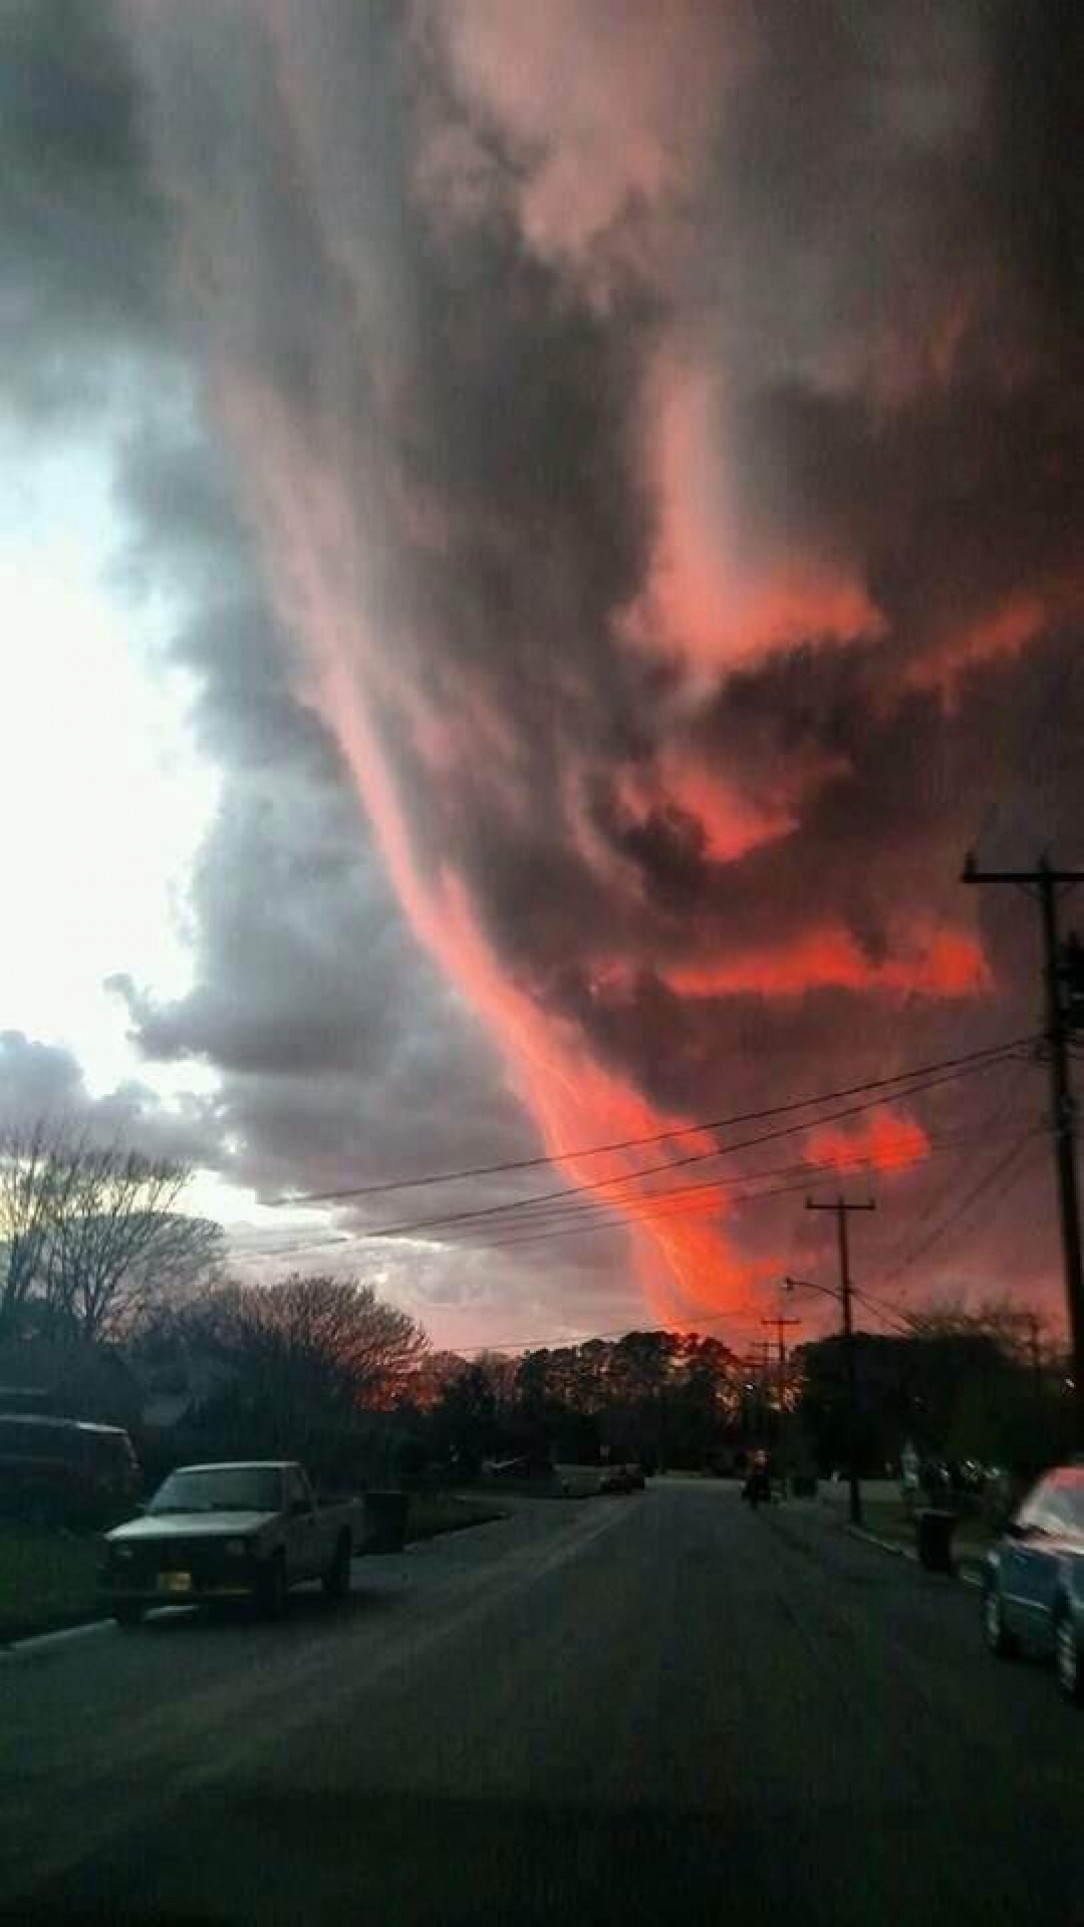 The sky looks creepy